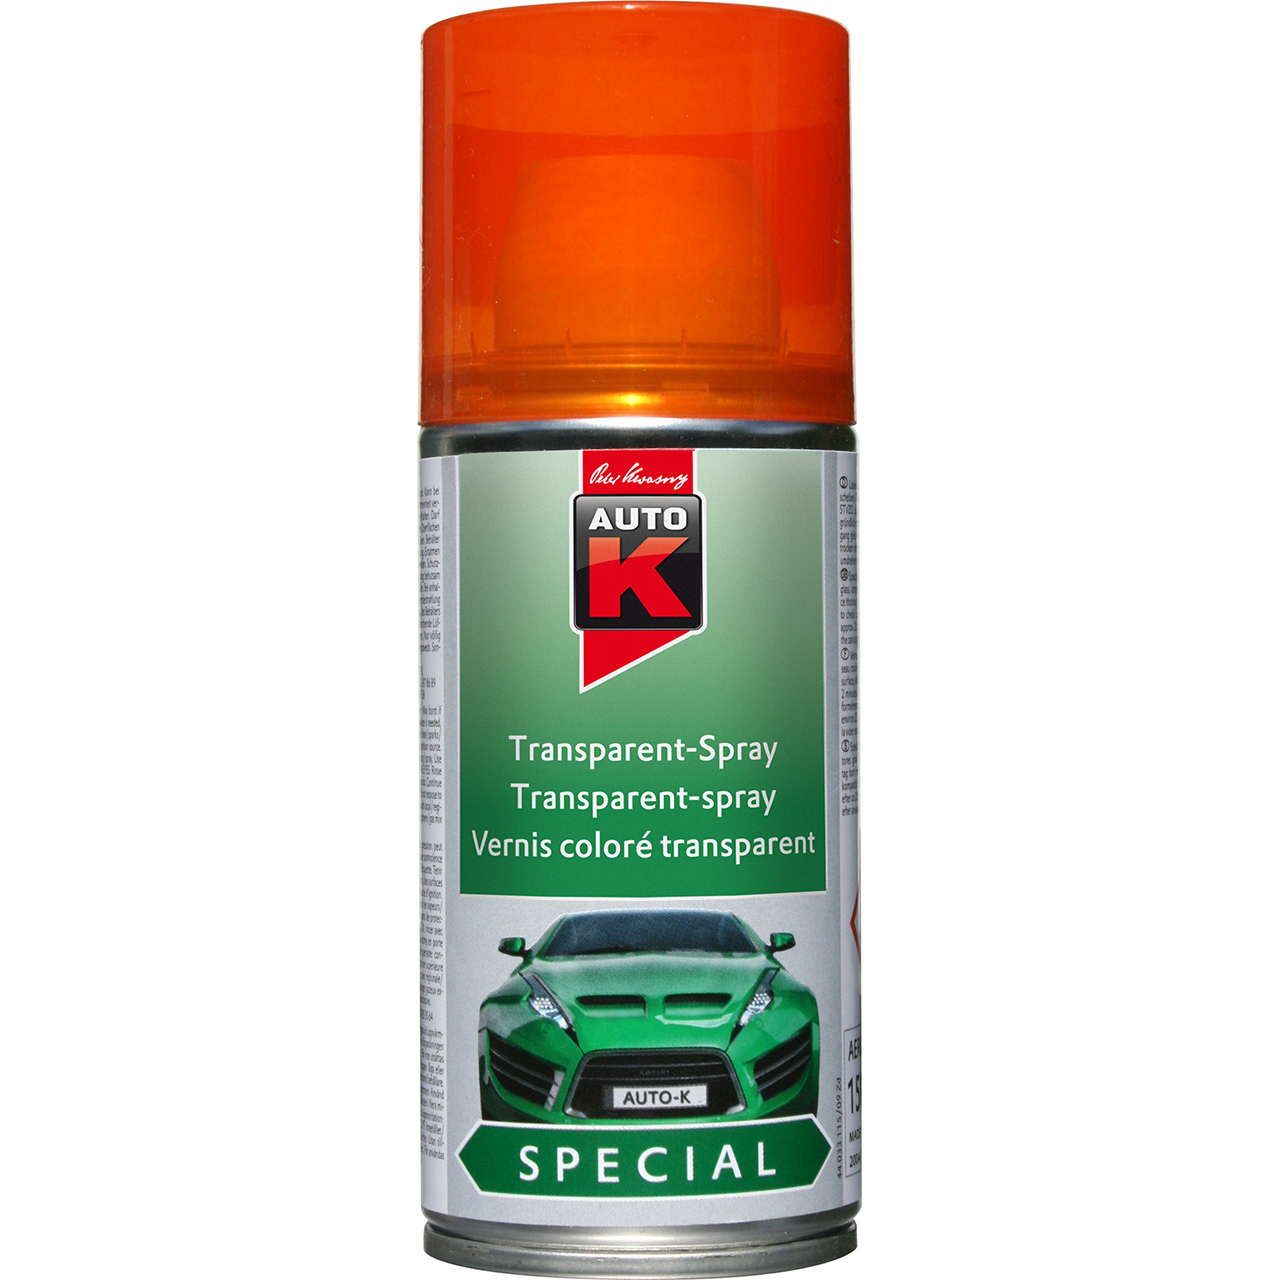 Auto-K Special Transparent-Spray orange 150ml